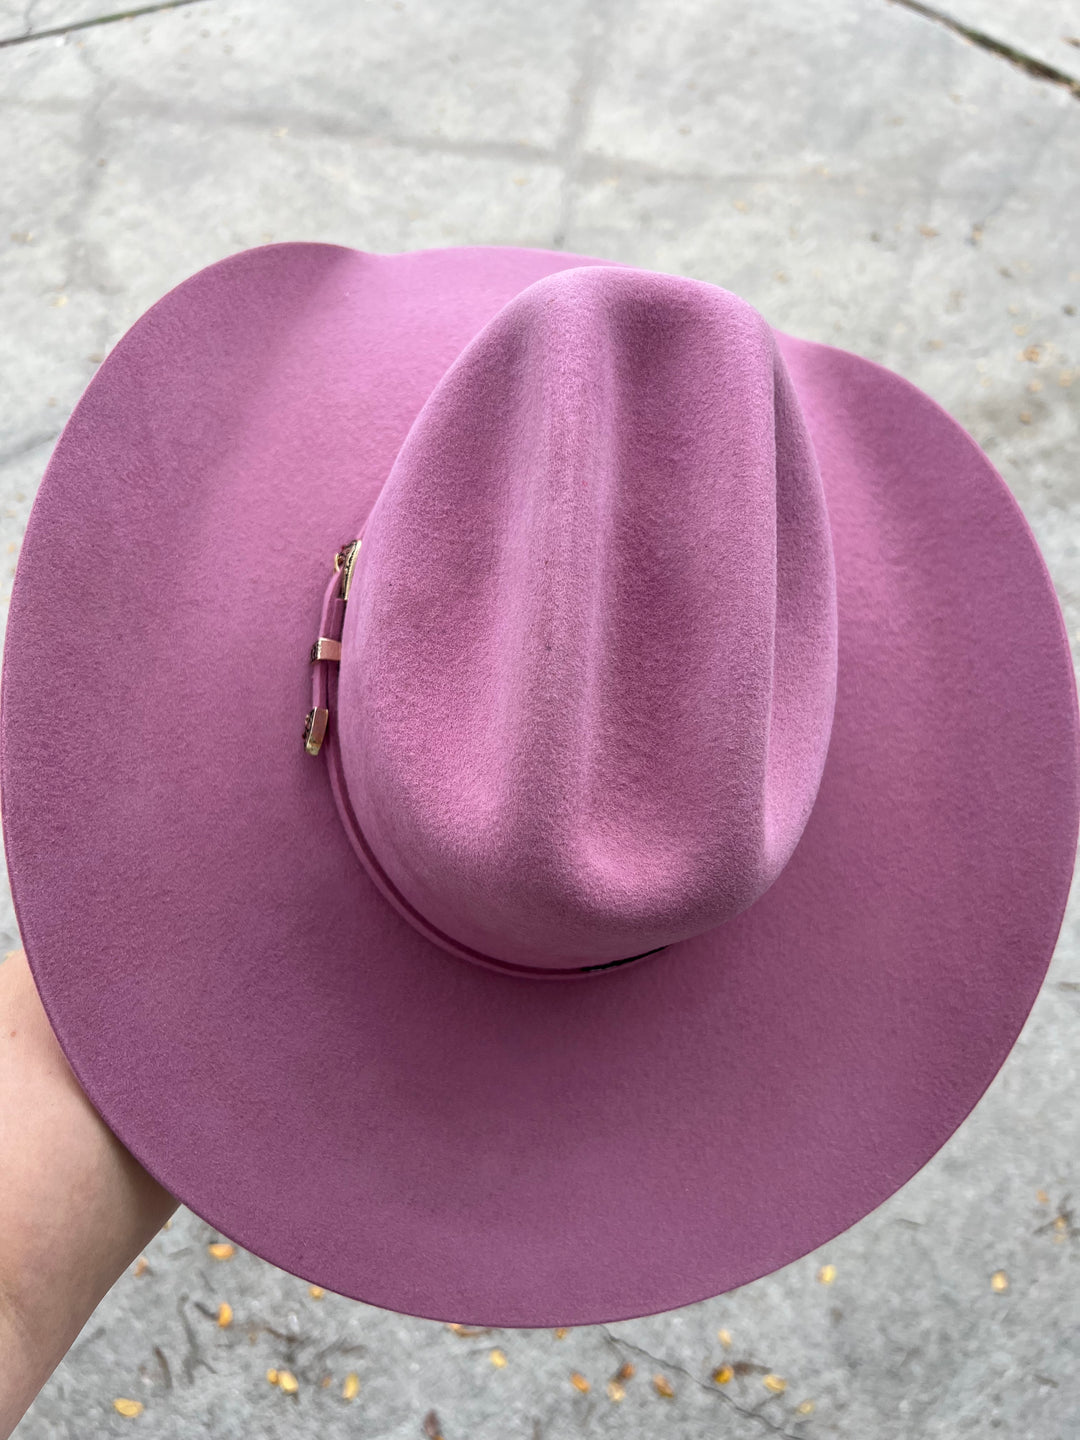 ProHats Fine Wool Felt Hat - Calgary Pink